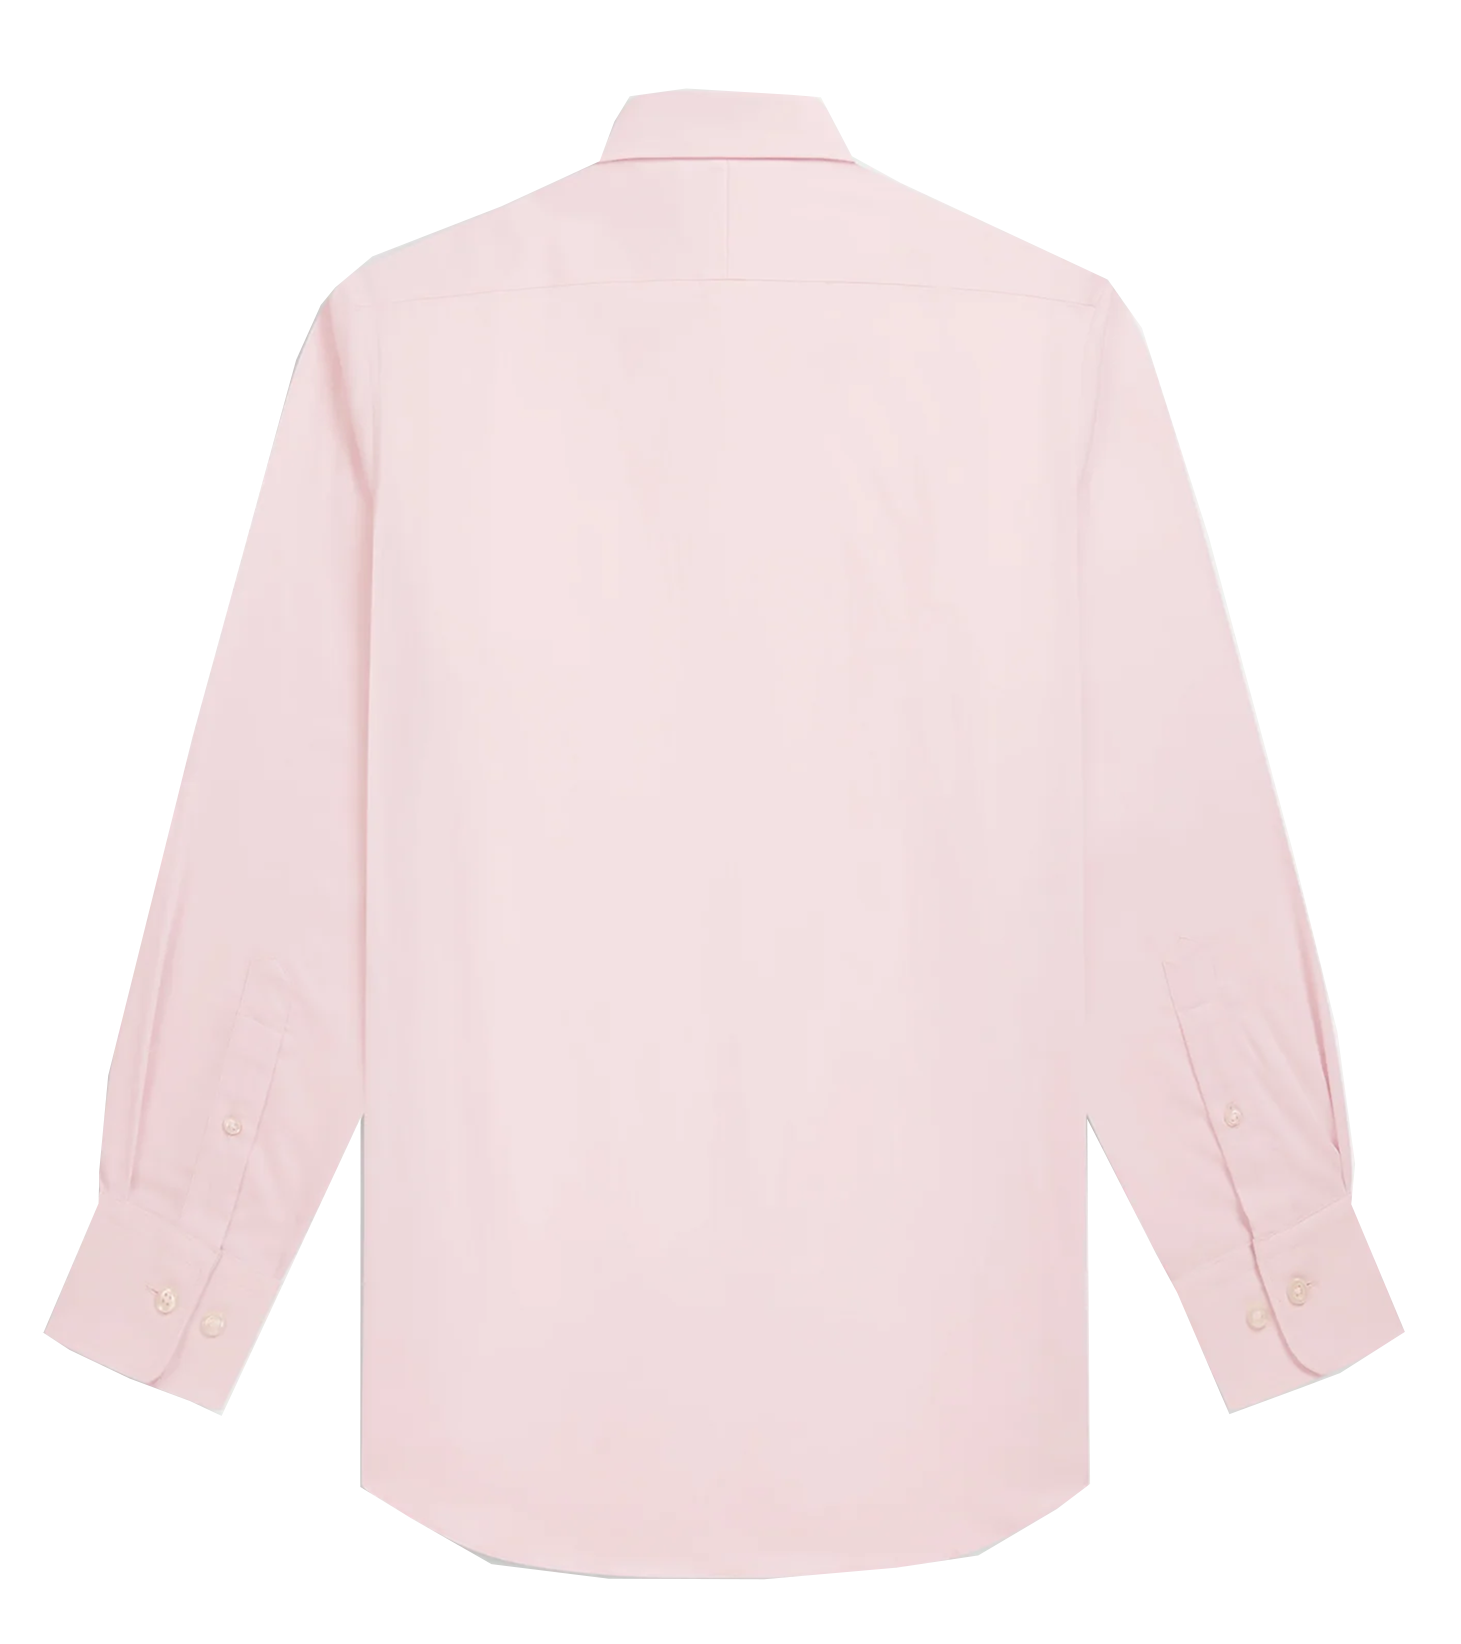 Pink Second Life Shirt Volume 2 - White Print